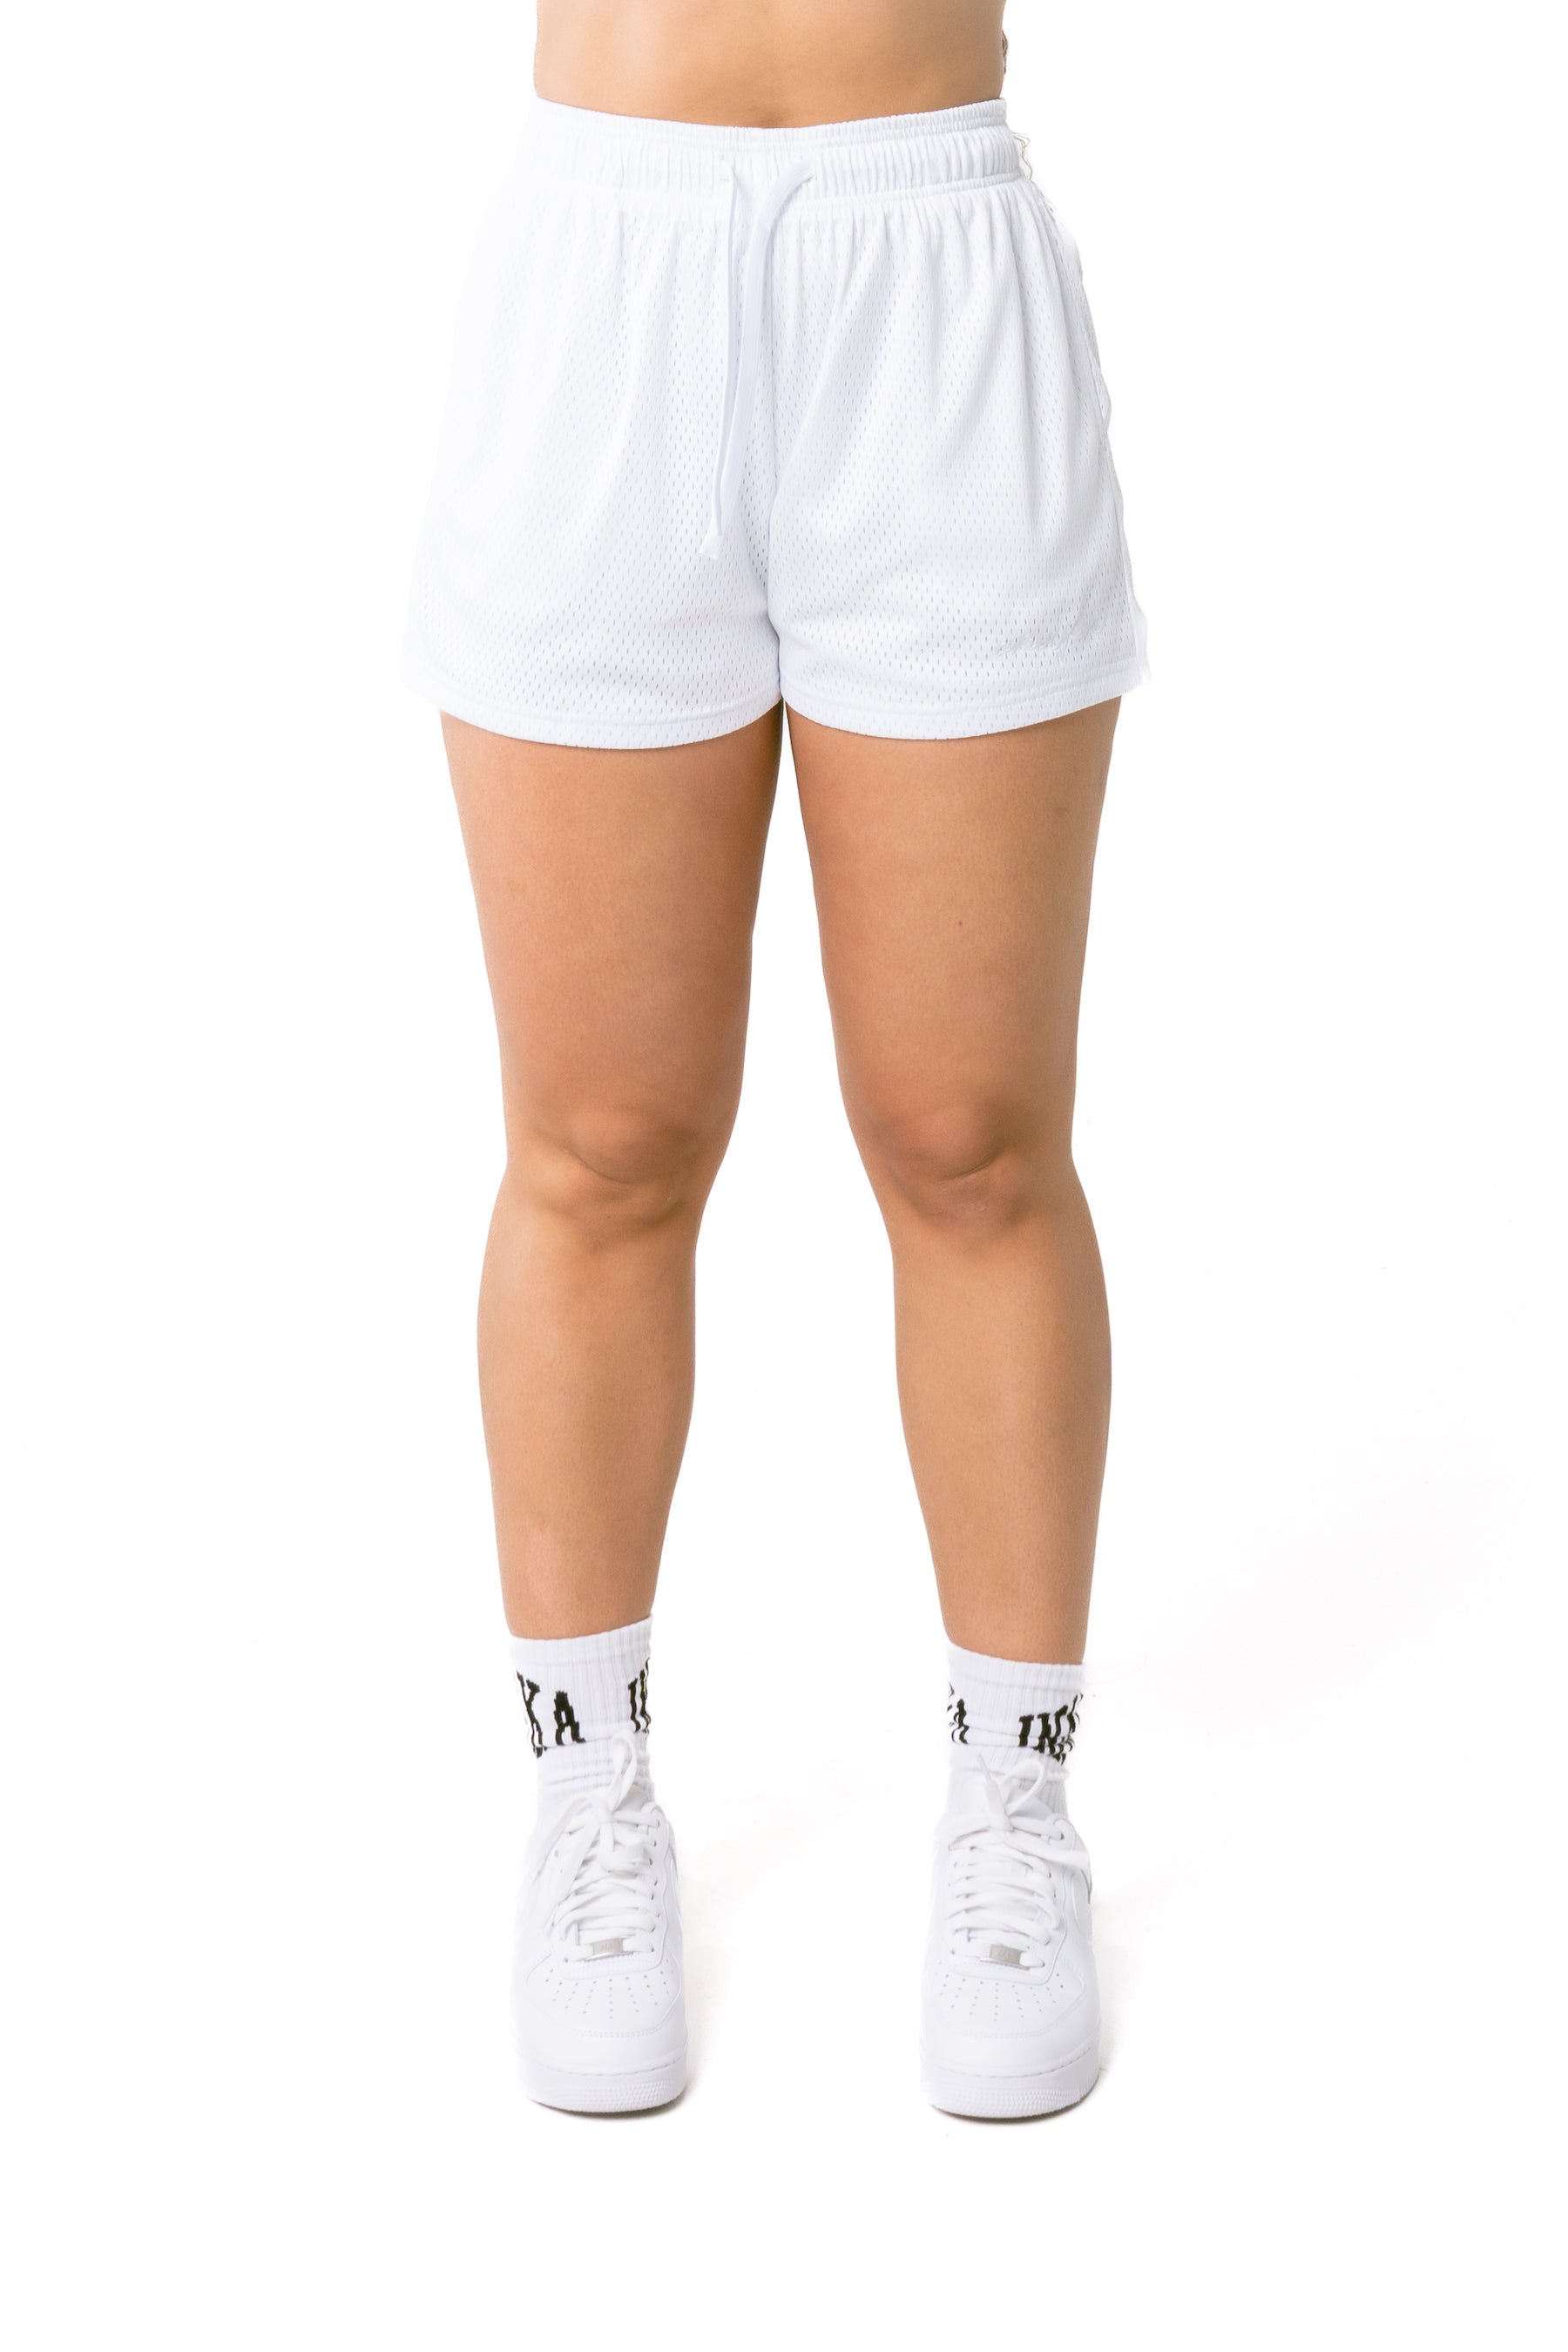 Women's Basic Shorts - Platinum White